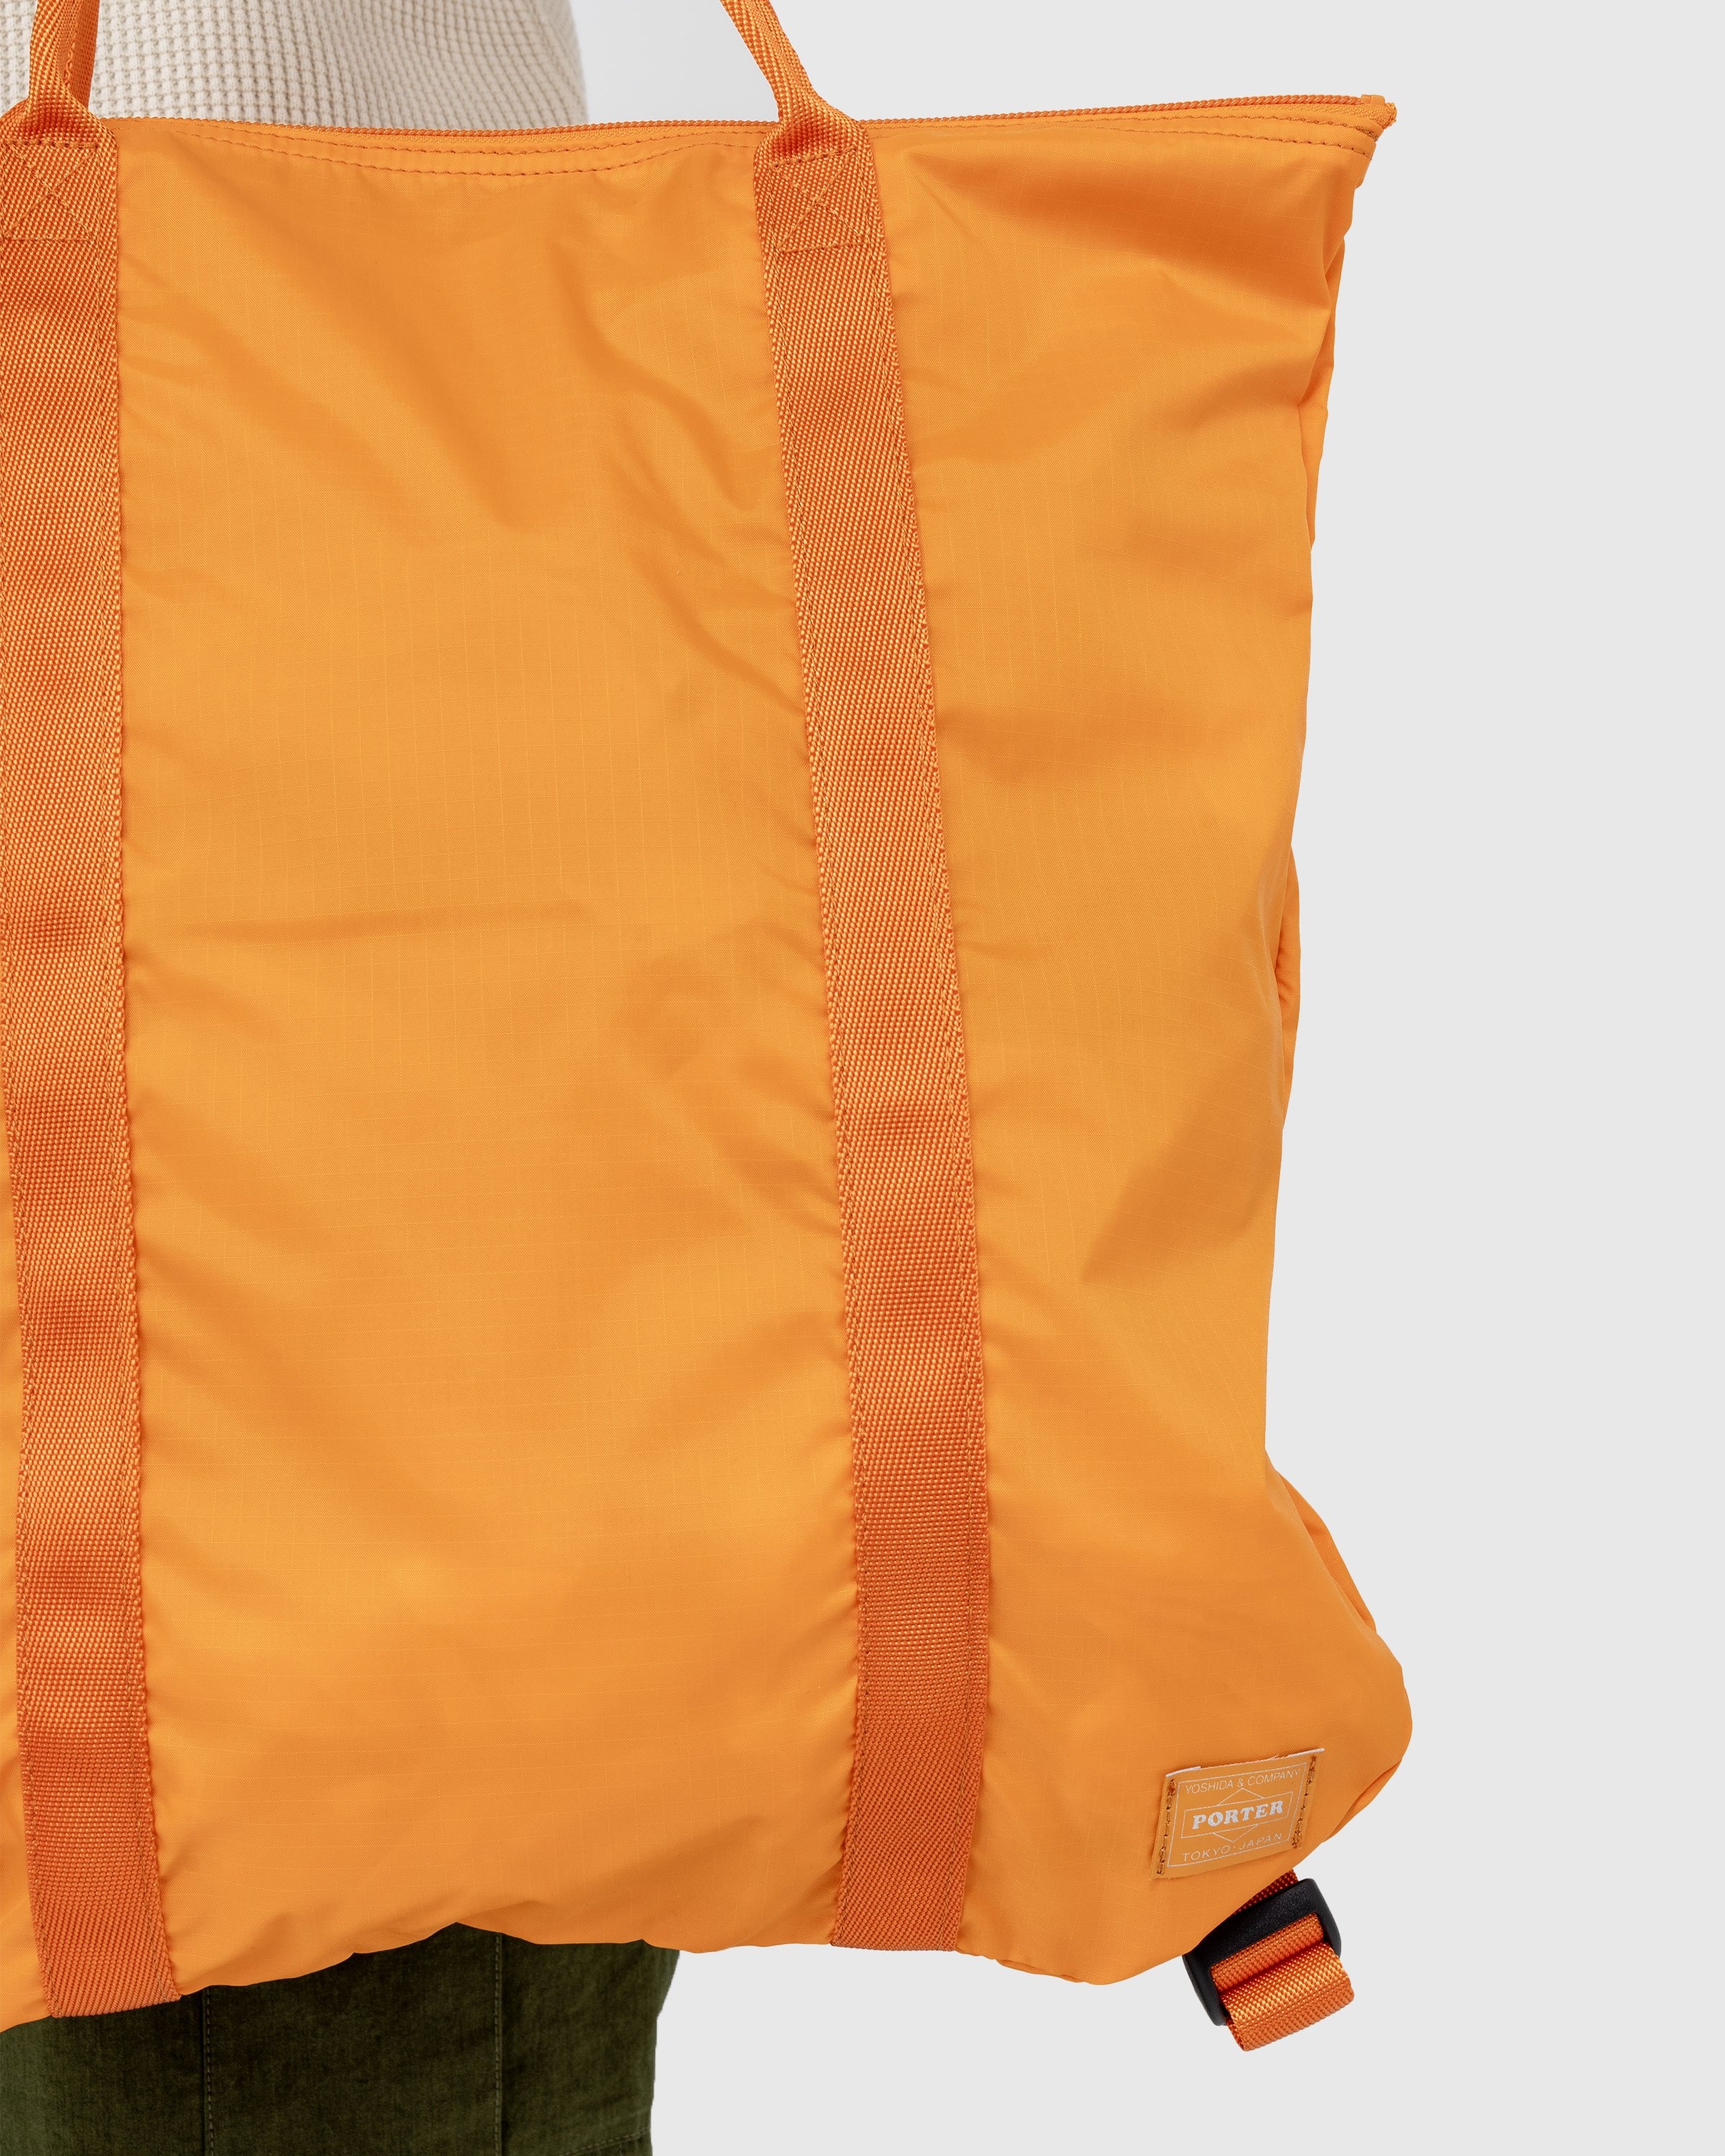 Porter-Yoshida & Co. – Flex 2-Way Tote Bag Orange - Bags - Orange - Image 5